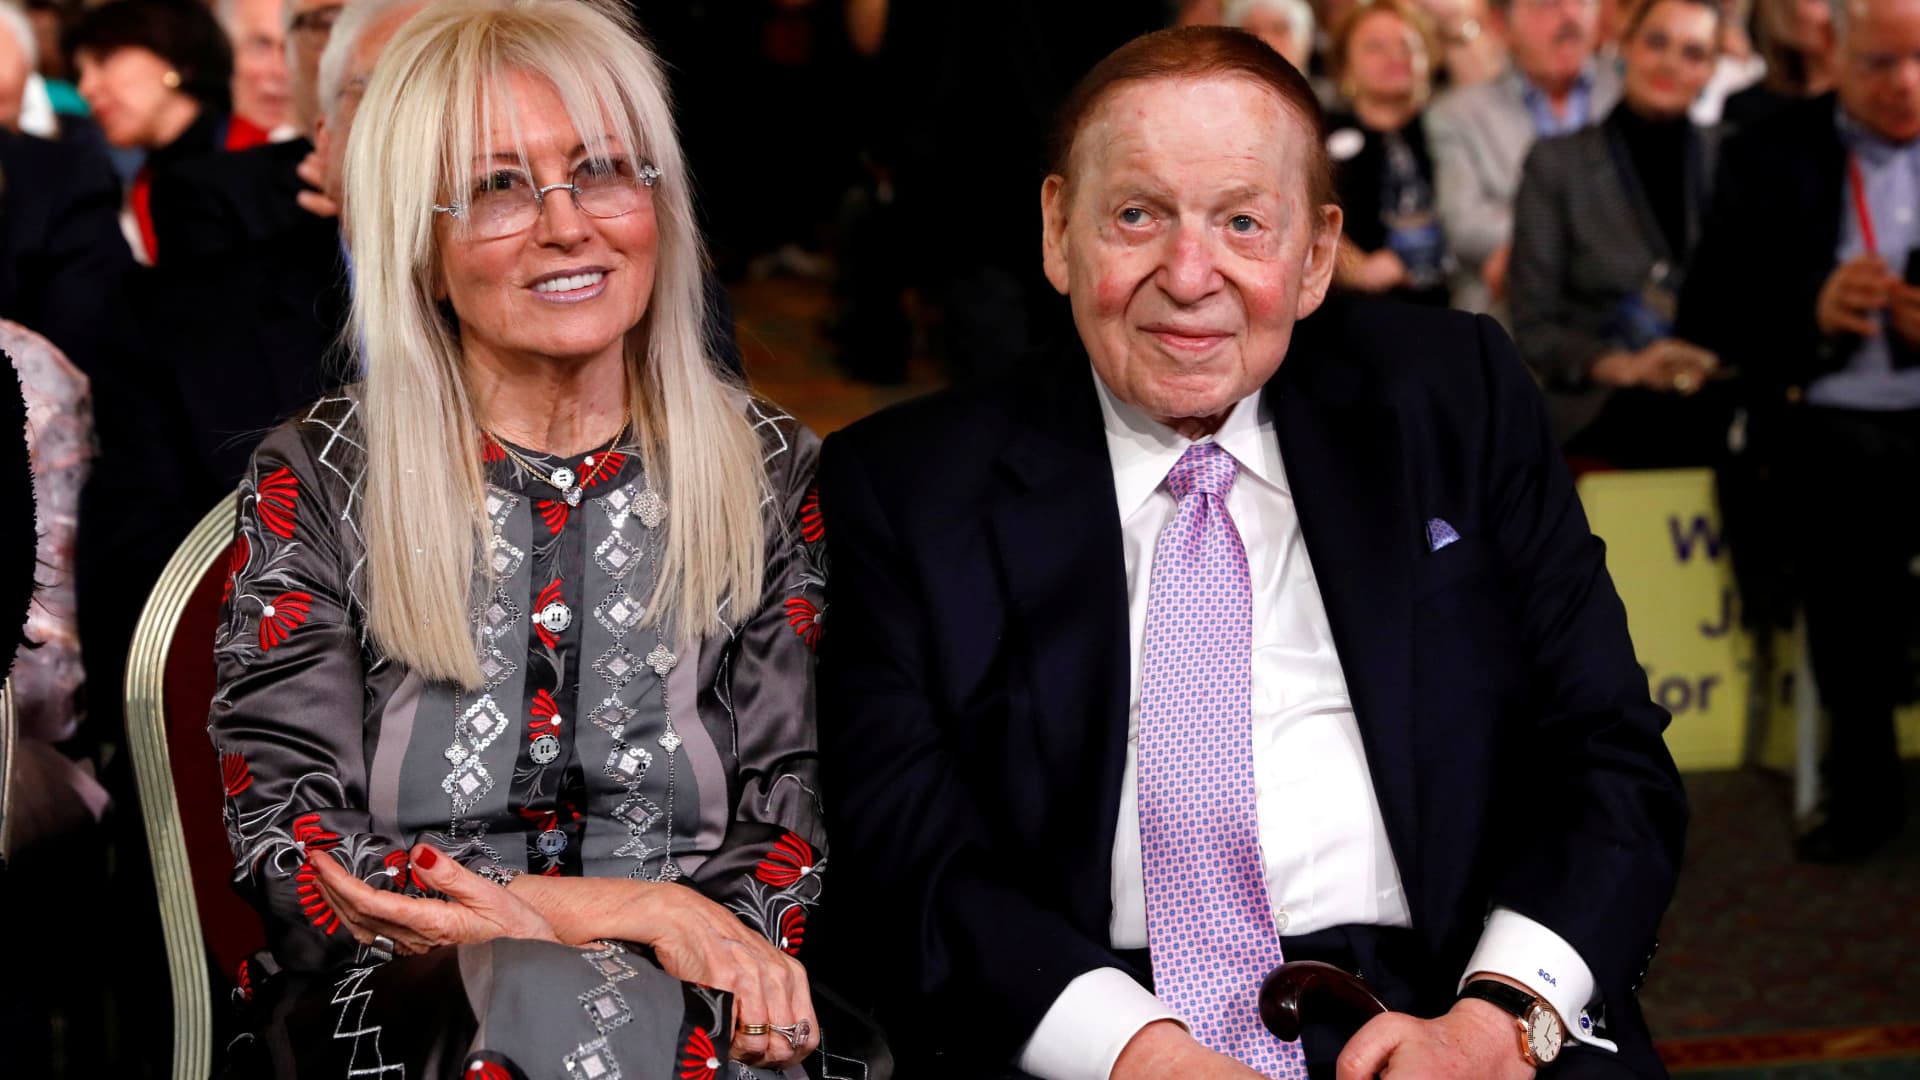 Casino magnate Sheldon Adelson and his wife Miriam listen to U.S. President Donald Trump address the Republican Jewish Coalition 2019 Annual Leadership Meeting in Las Vegas, Nevada, U.S., April 6, 2019.